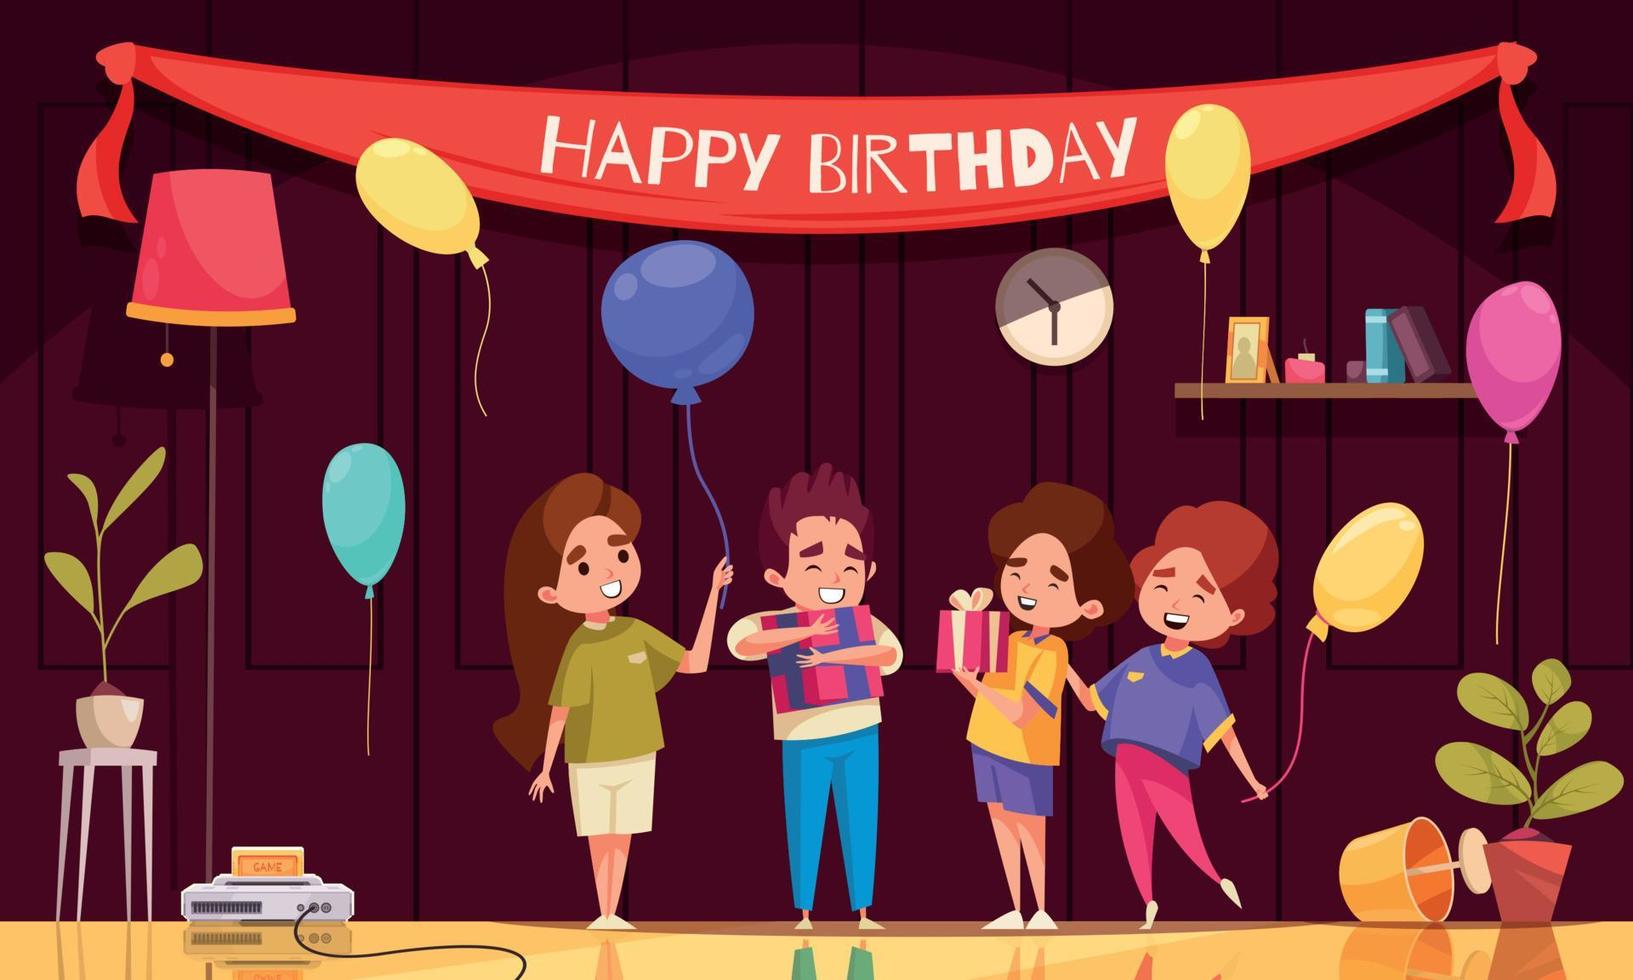 Birthday Party Illustration vector